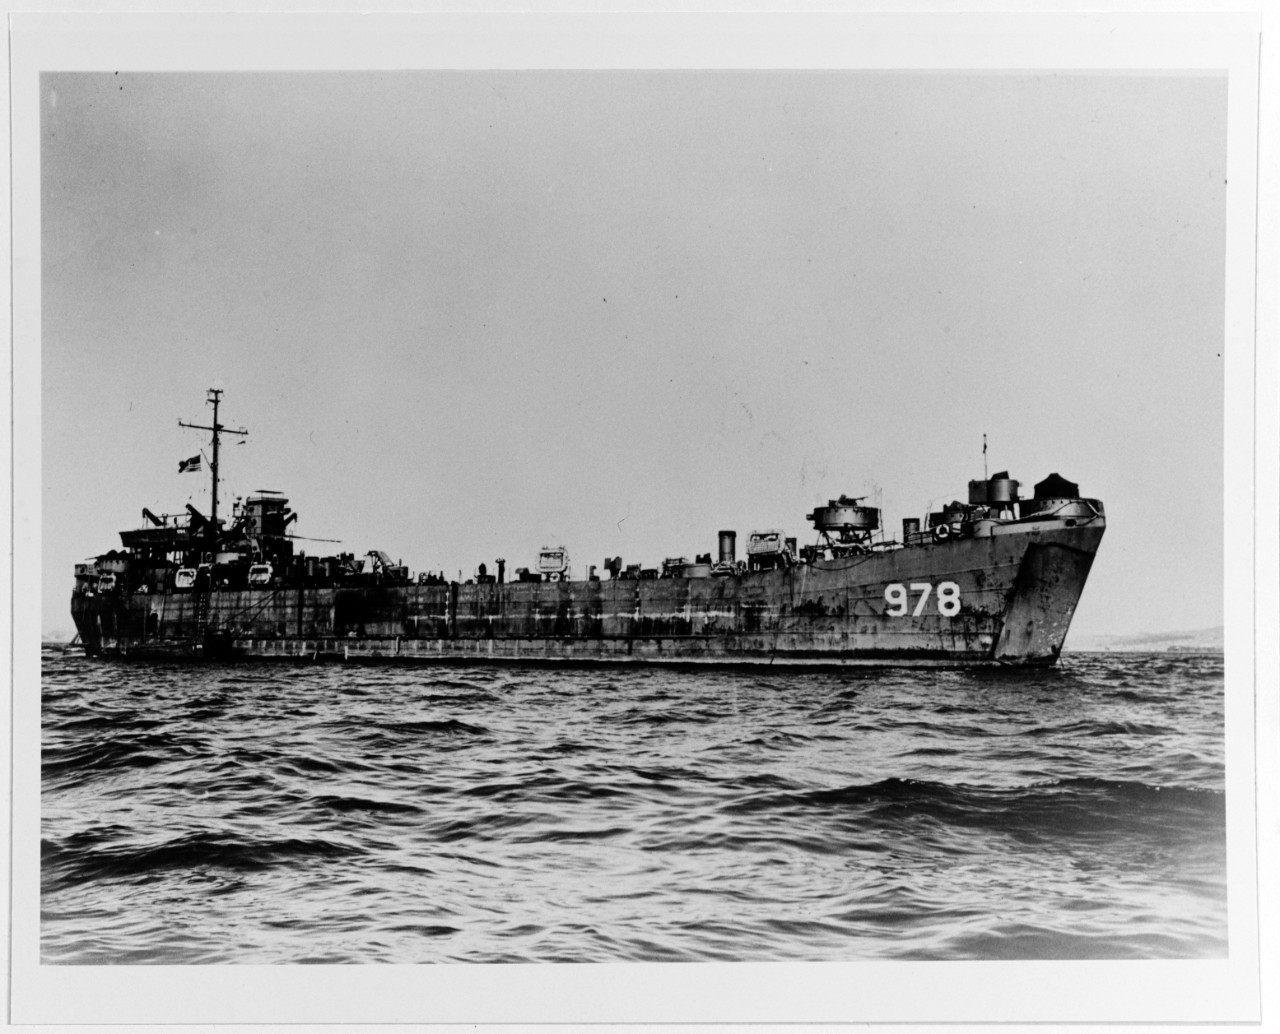 USS LSTH-978